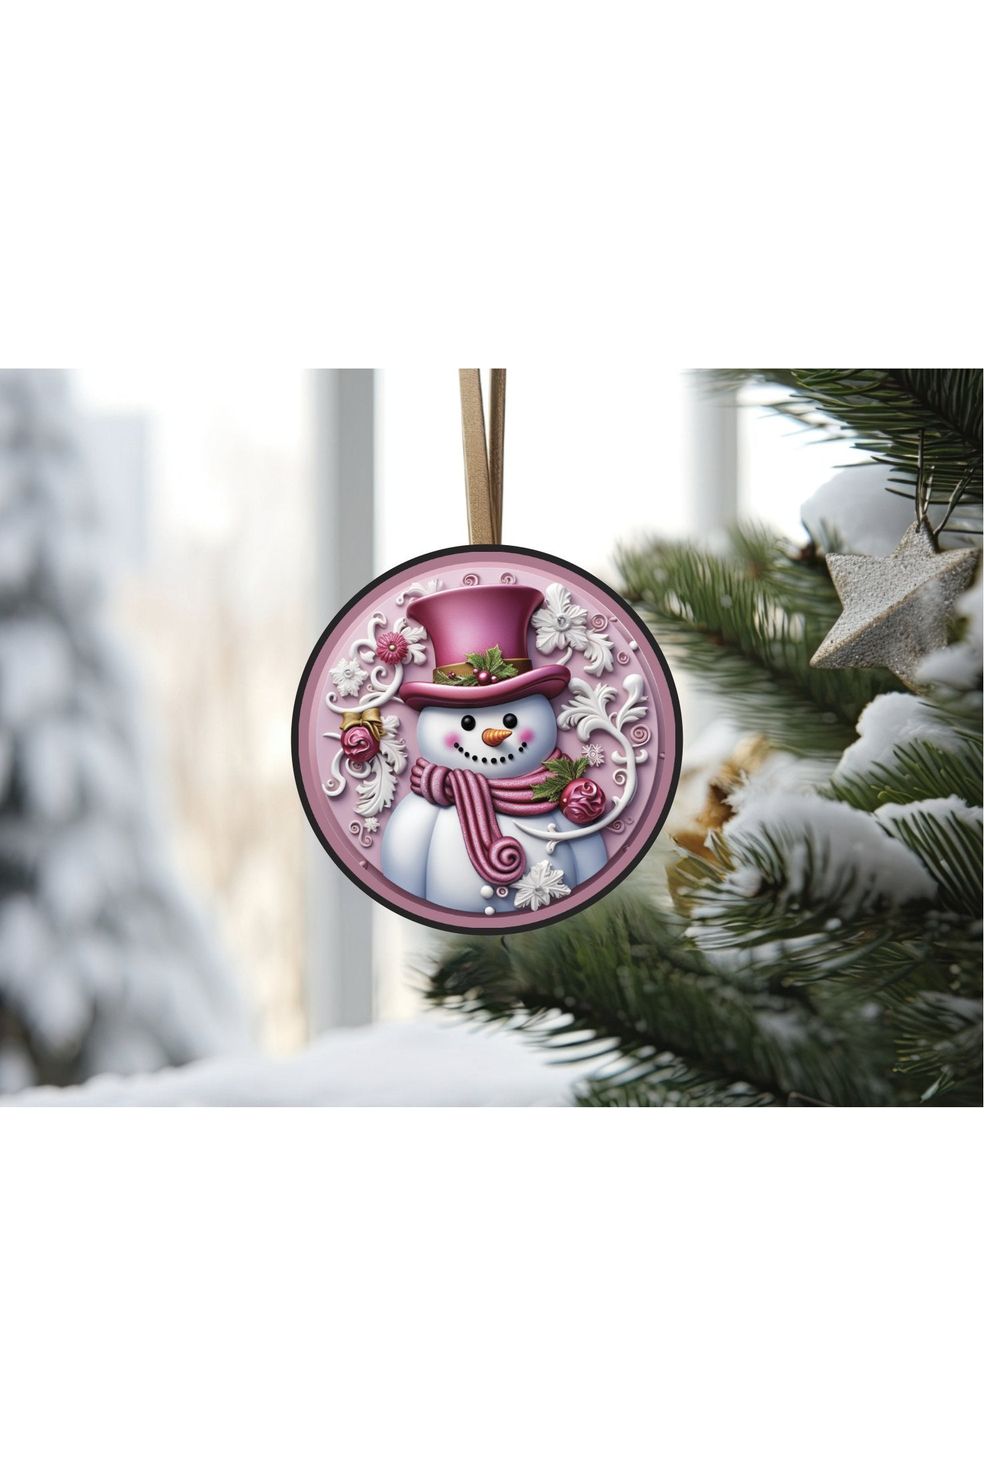 Shop For Pink Snowman Top Hat Round Sign - Wreath Enhancement